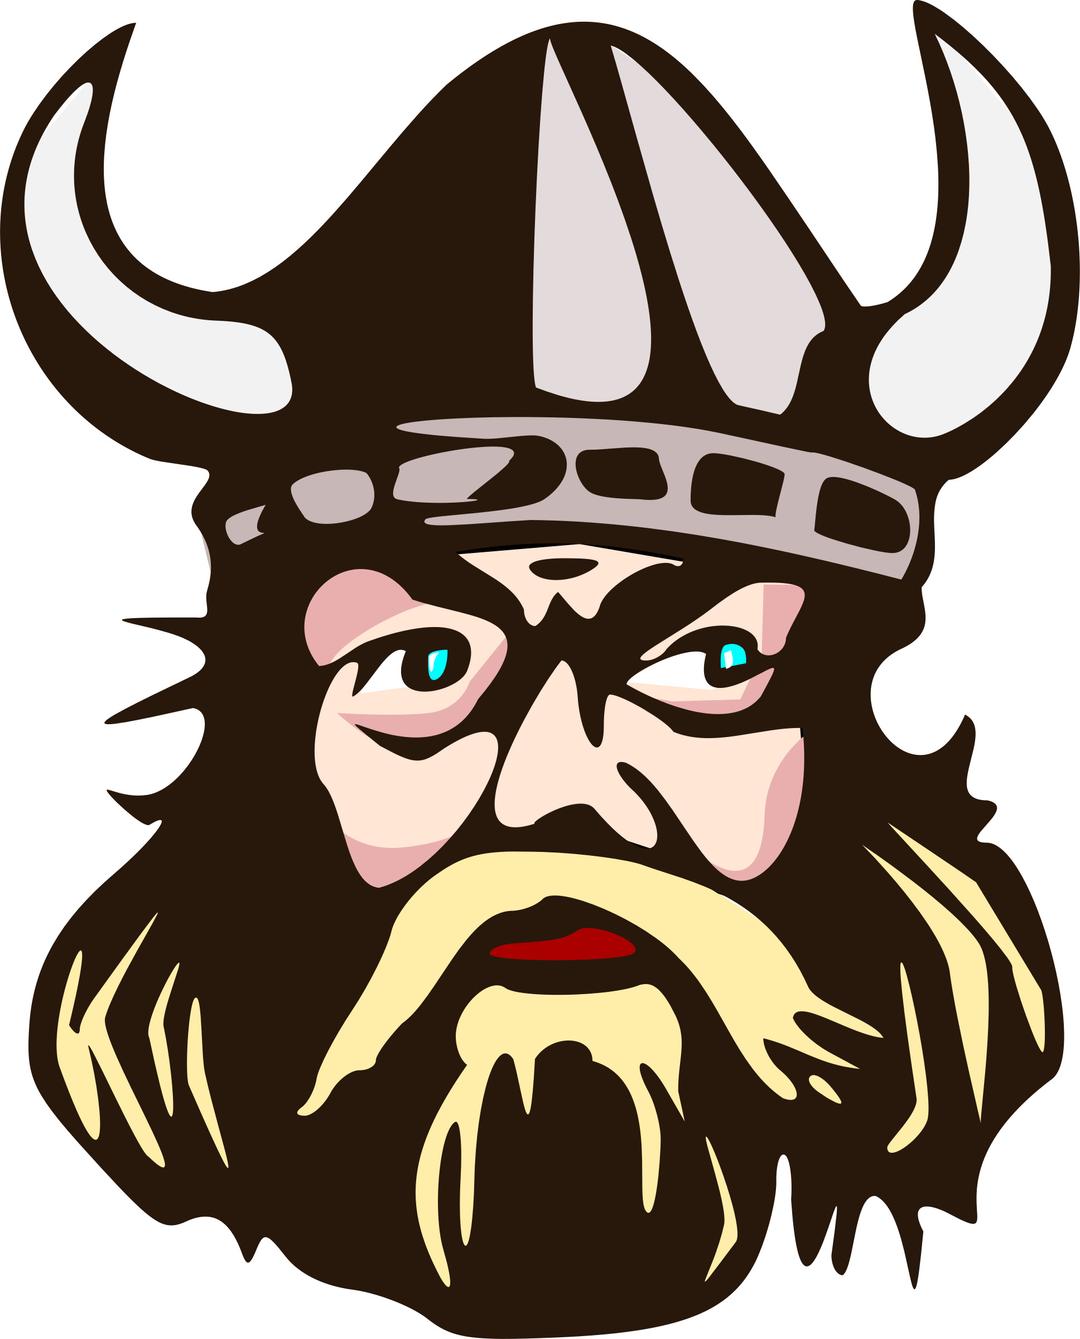 Viking Man Illustration png transparent